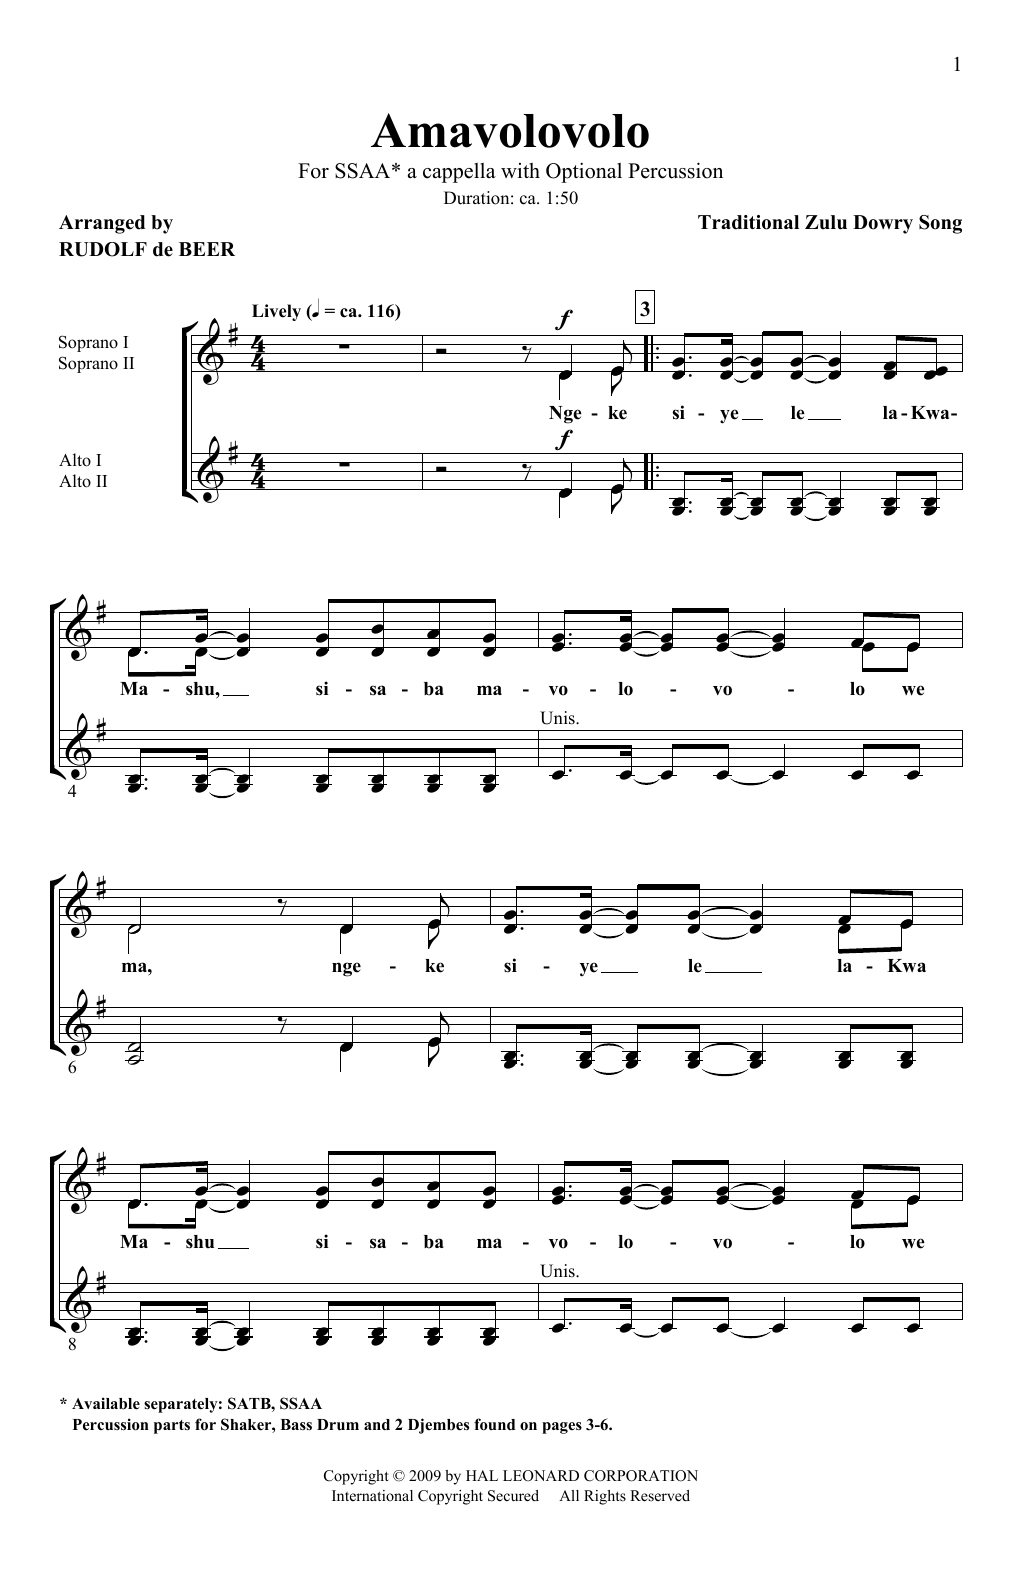 Download Traditional Zulu Dowry Song Amavolovolo (arr. Rudolf de Beer) Sheet Music